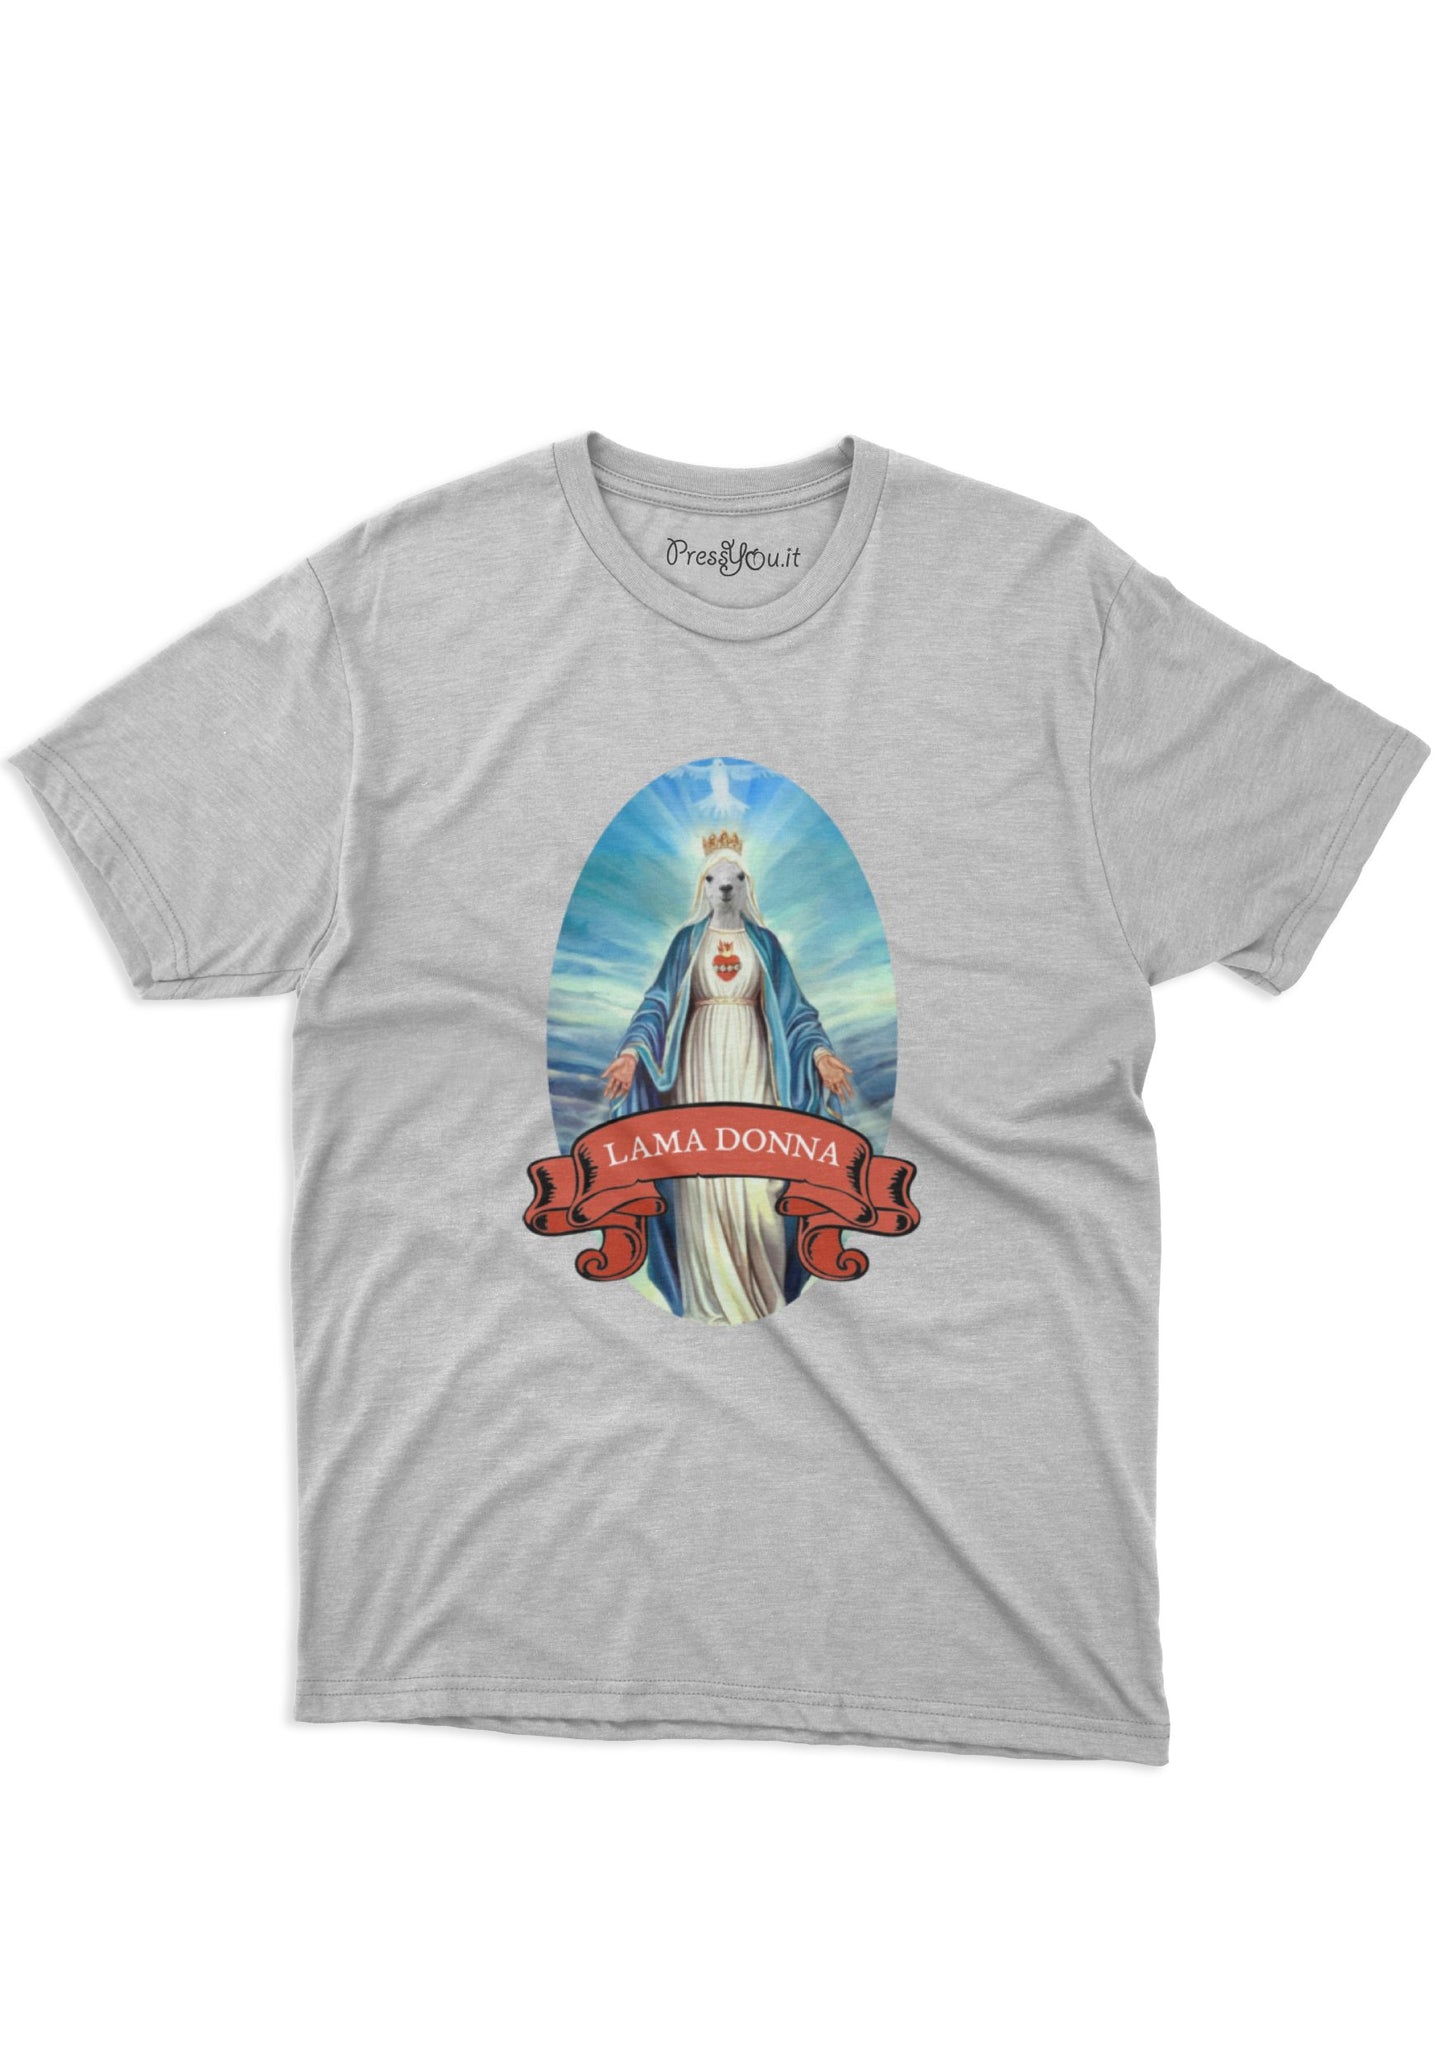 desecrating madonna women's t-shirt-lama t-shirt